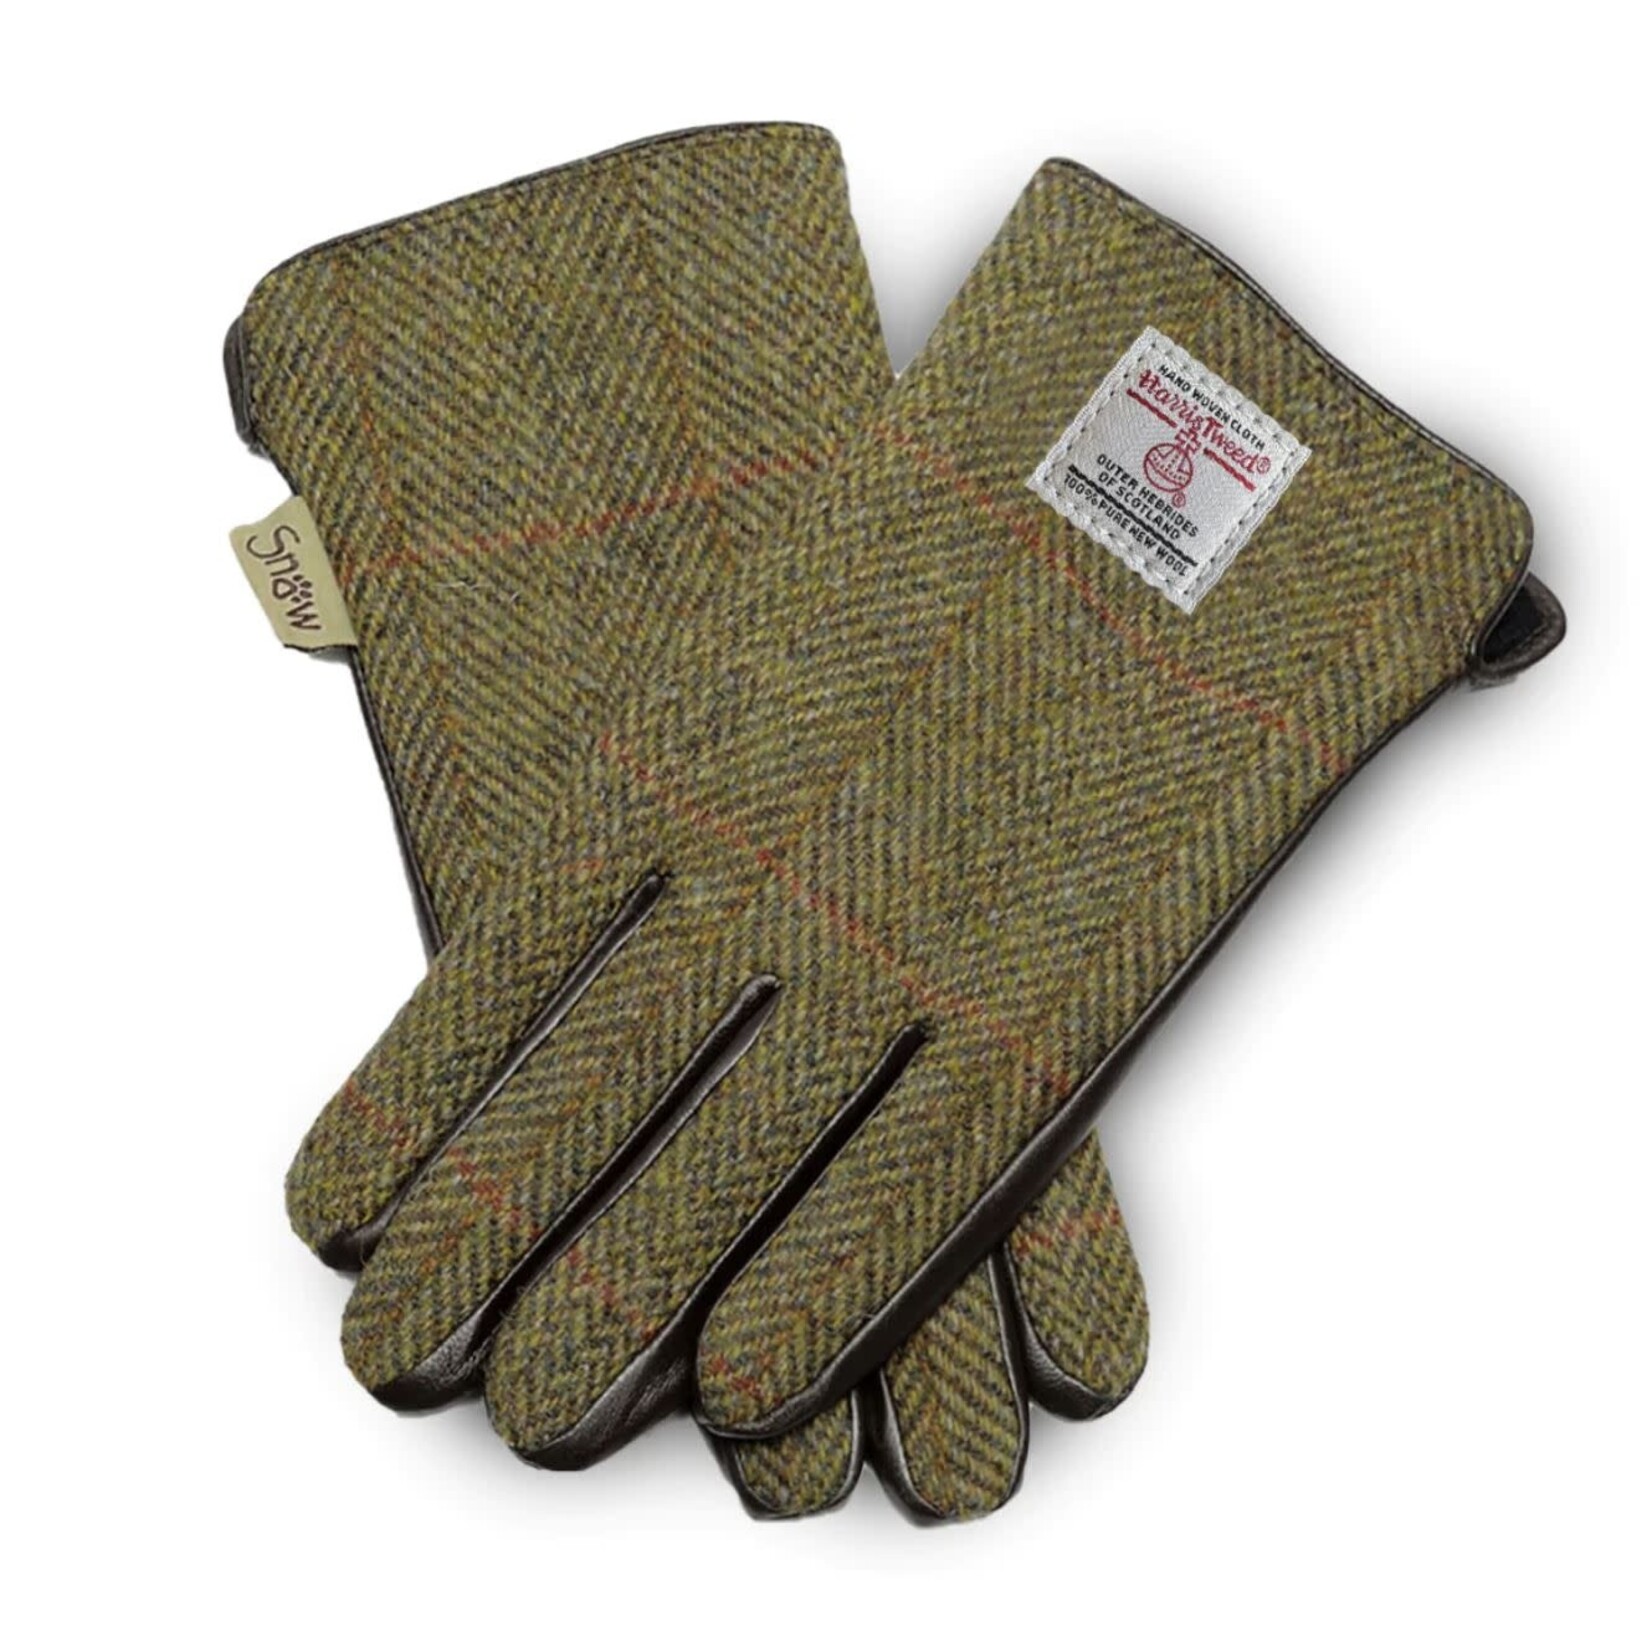 Islander Men's Tweed & Leather Gloves: Chestnut